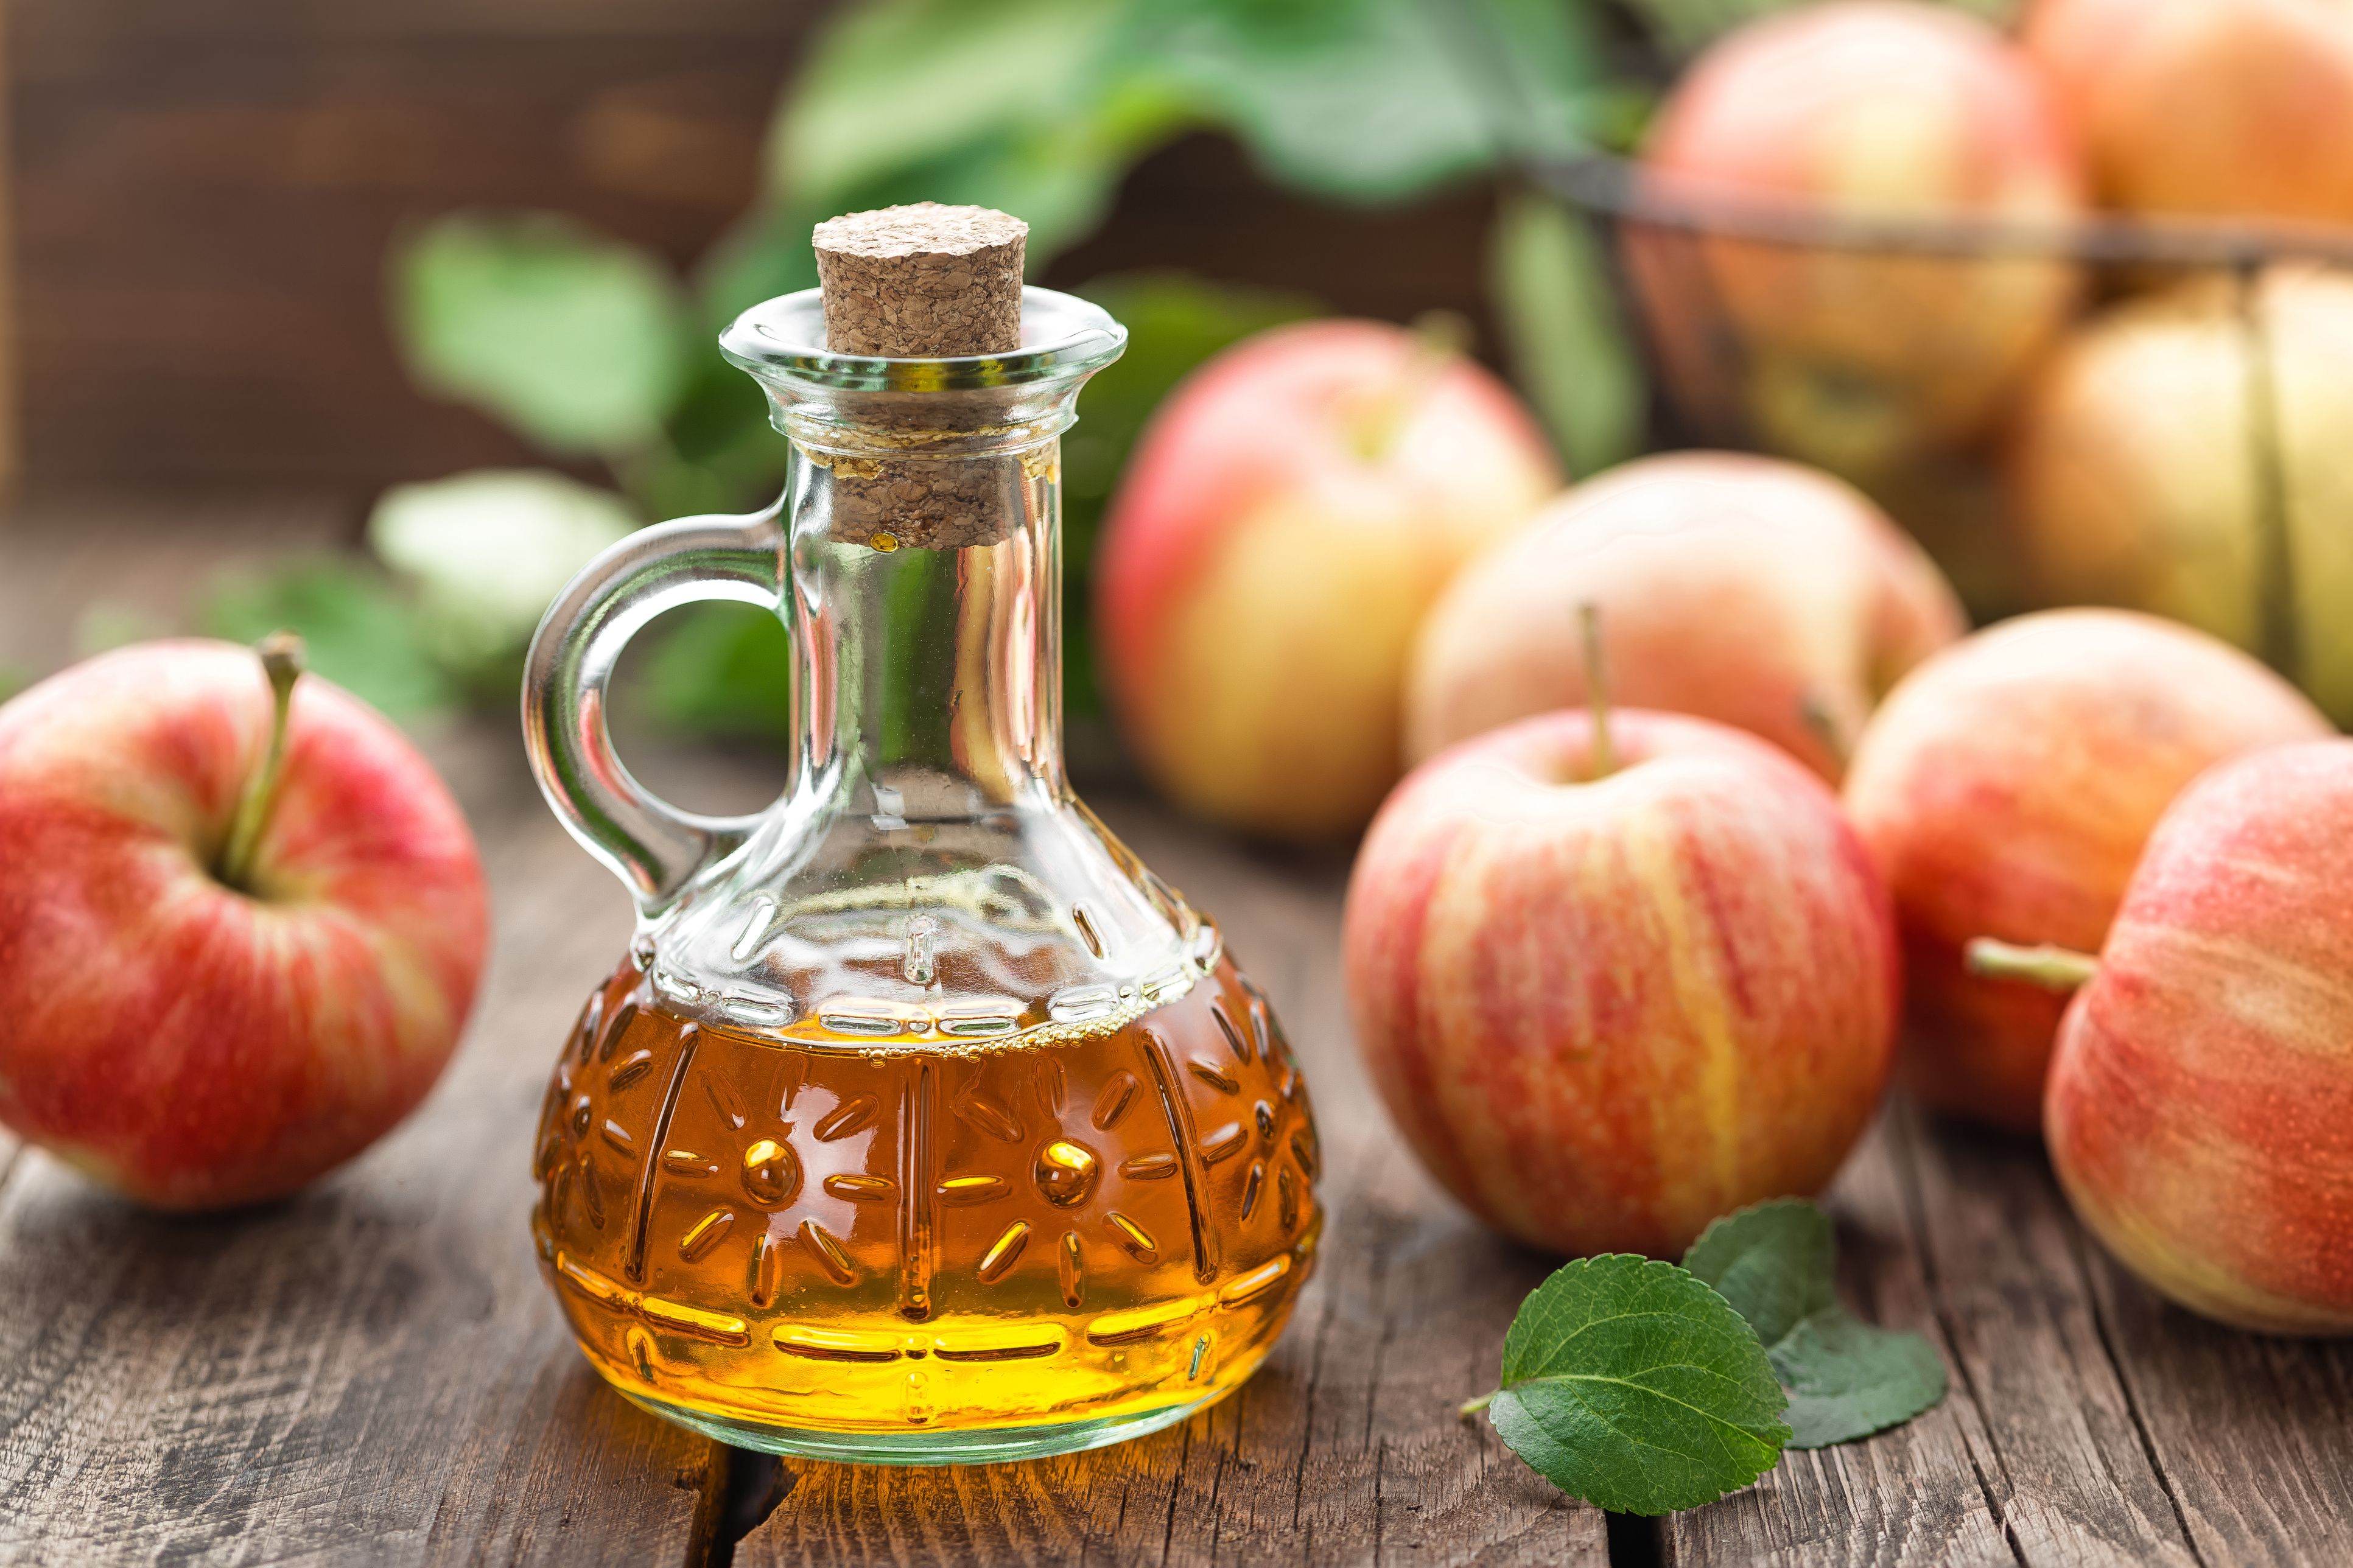 apple-cider-vinegar-royalty-free-image-614444404-1533158045.jpg